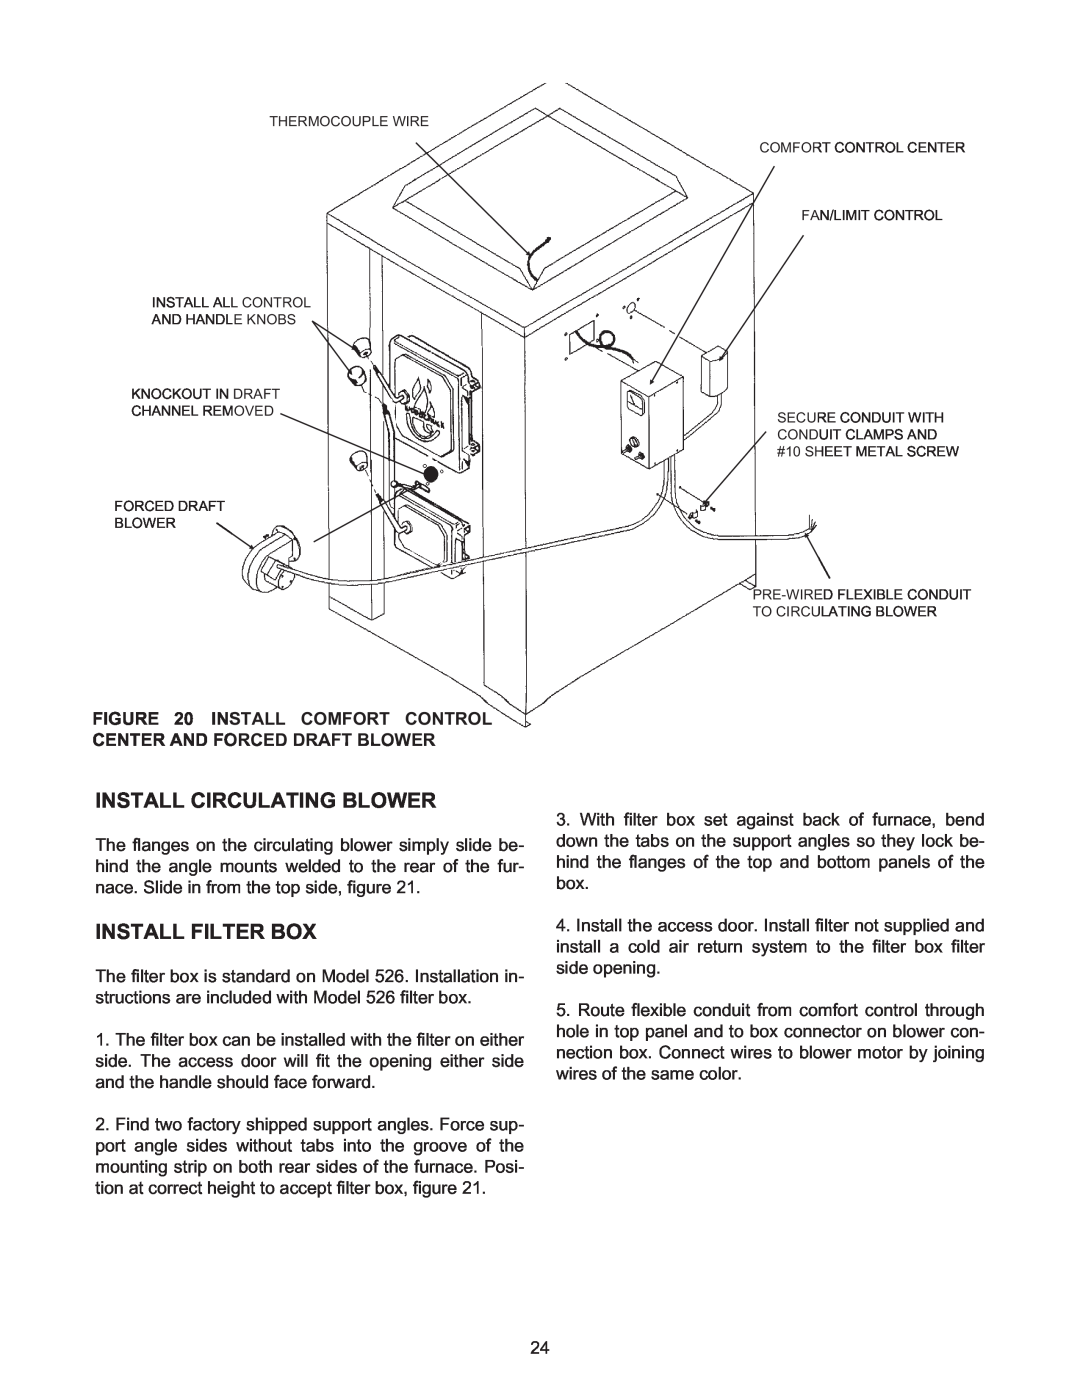 Meyer woodchuck, 526, 2900, 4000 manual Install Circulating Blower, Install Filter Box 